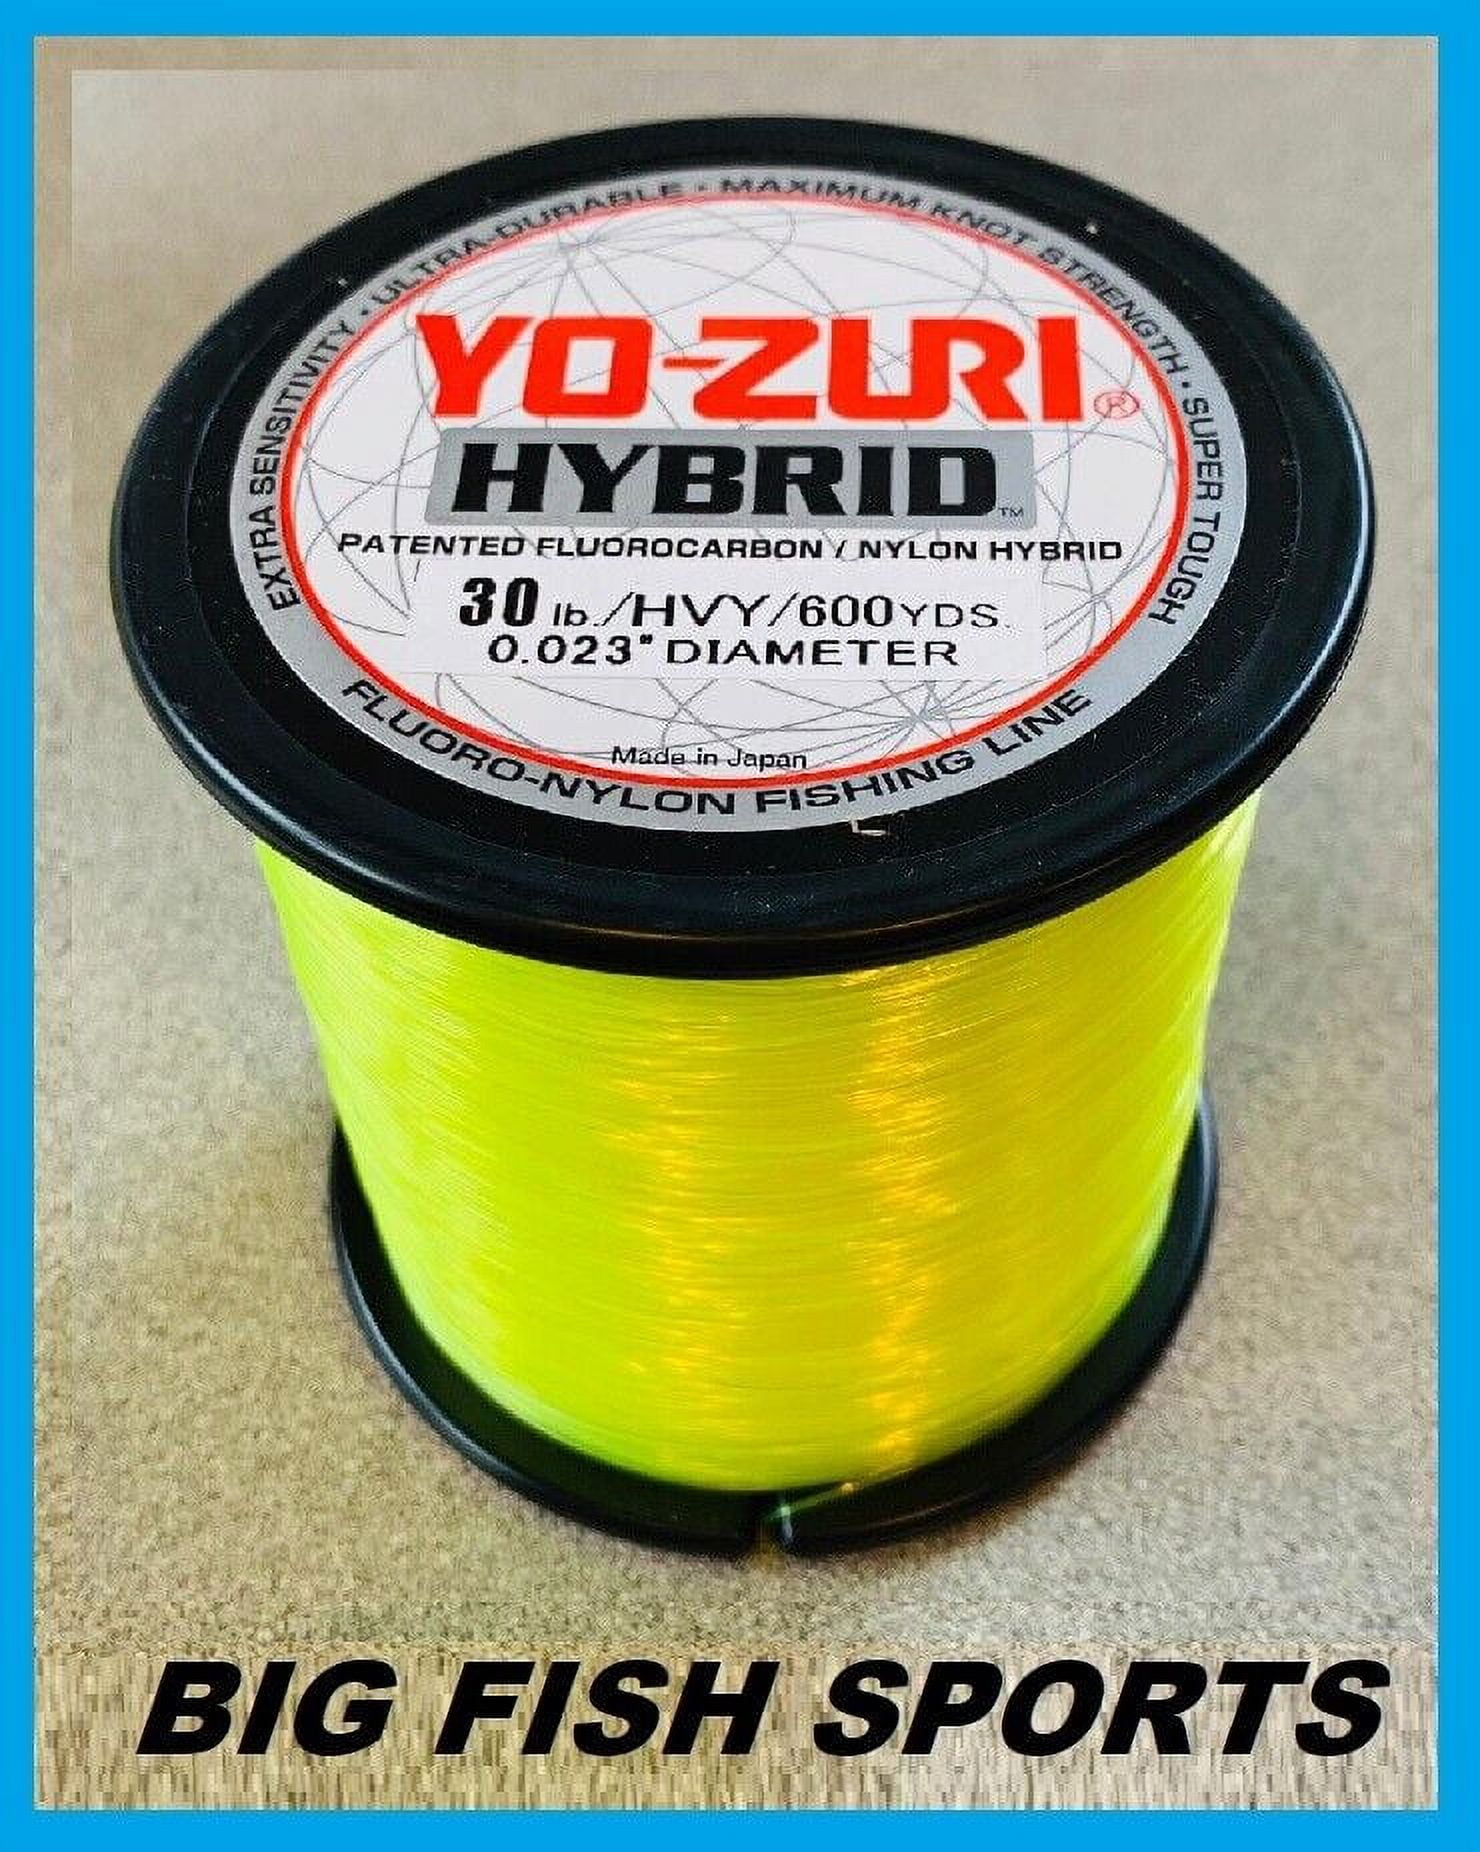 YO-ZURI HYBRID Fluorocarbon Fishing Line 30lb/600yd HIVIS NEW! 